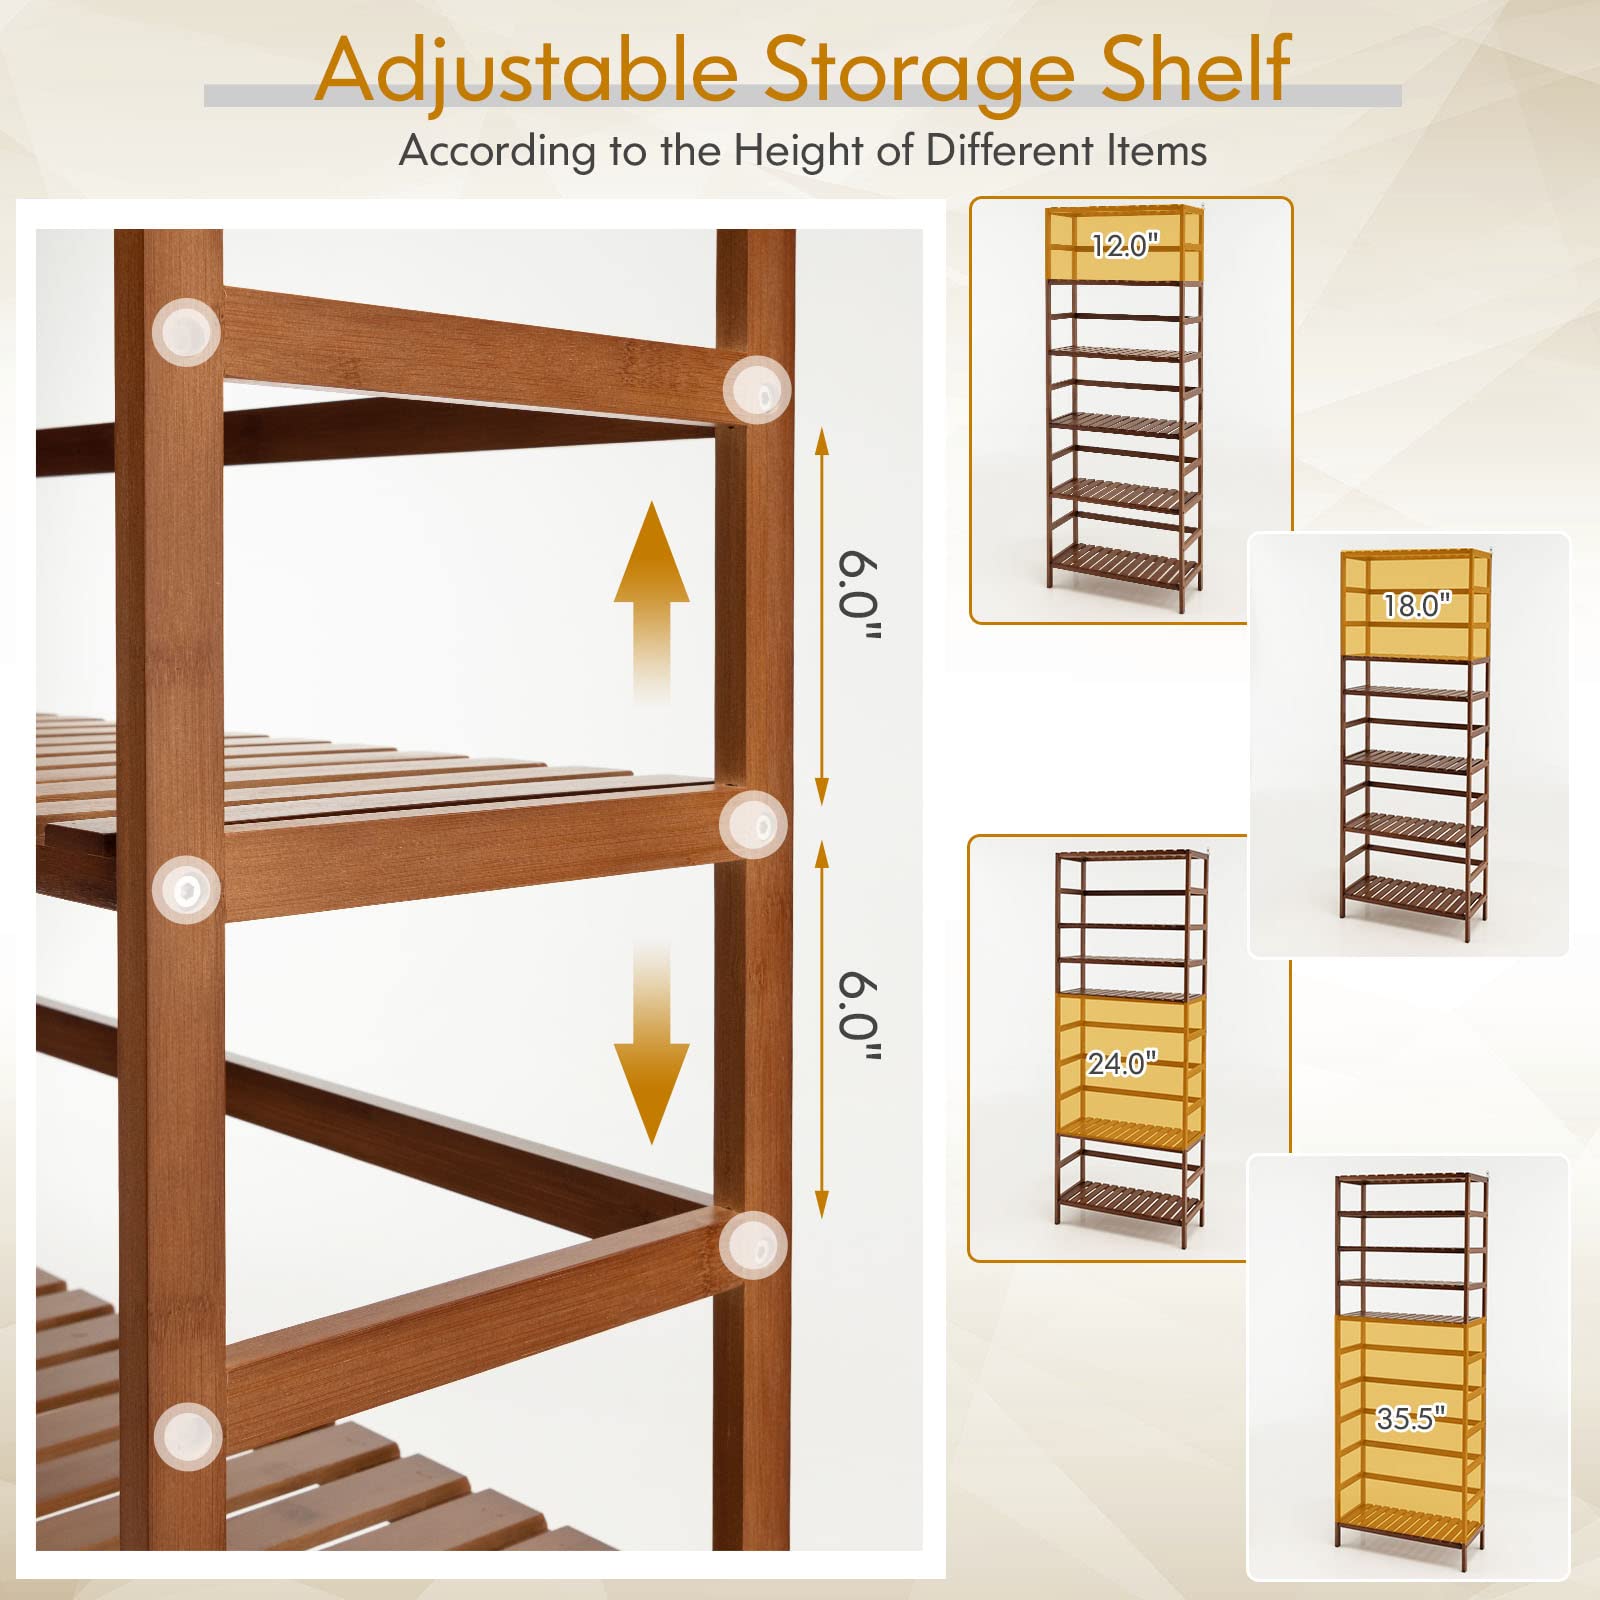 Giantex 6-Tier Bamboo Bookshelf, 63'' Tall Freesrtanding Storage Display Shelf with Adjustable Shelves